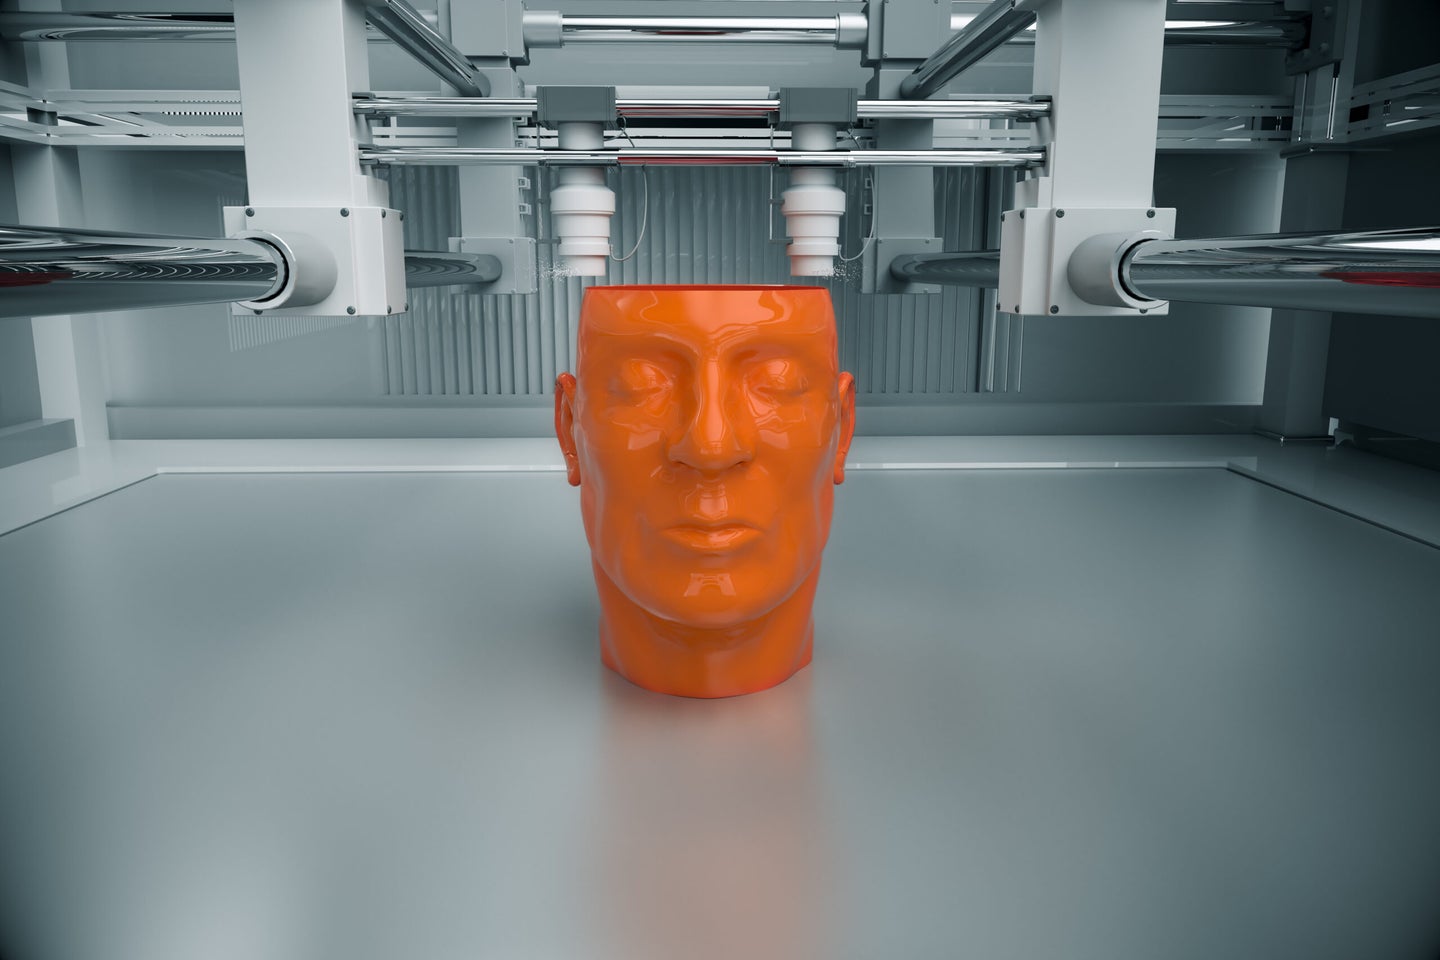 3D Printinted Model Of Human Head